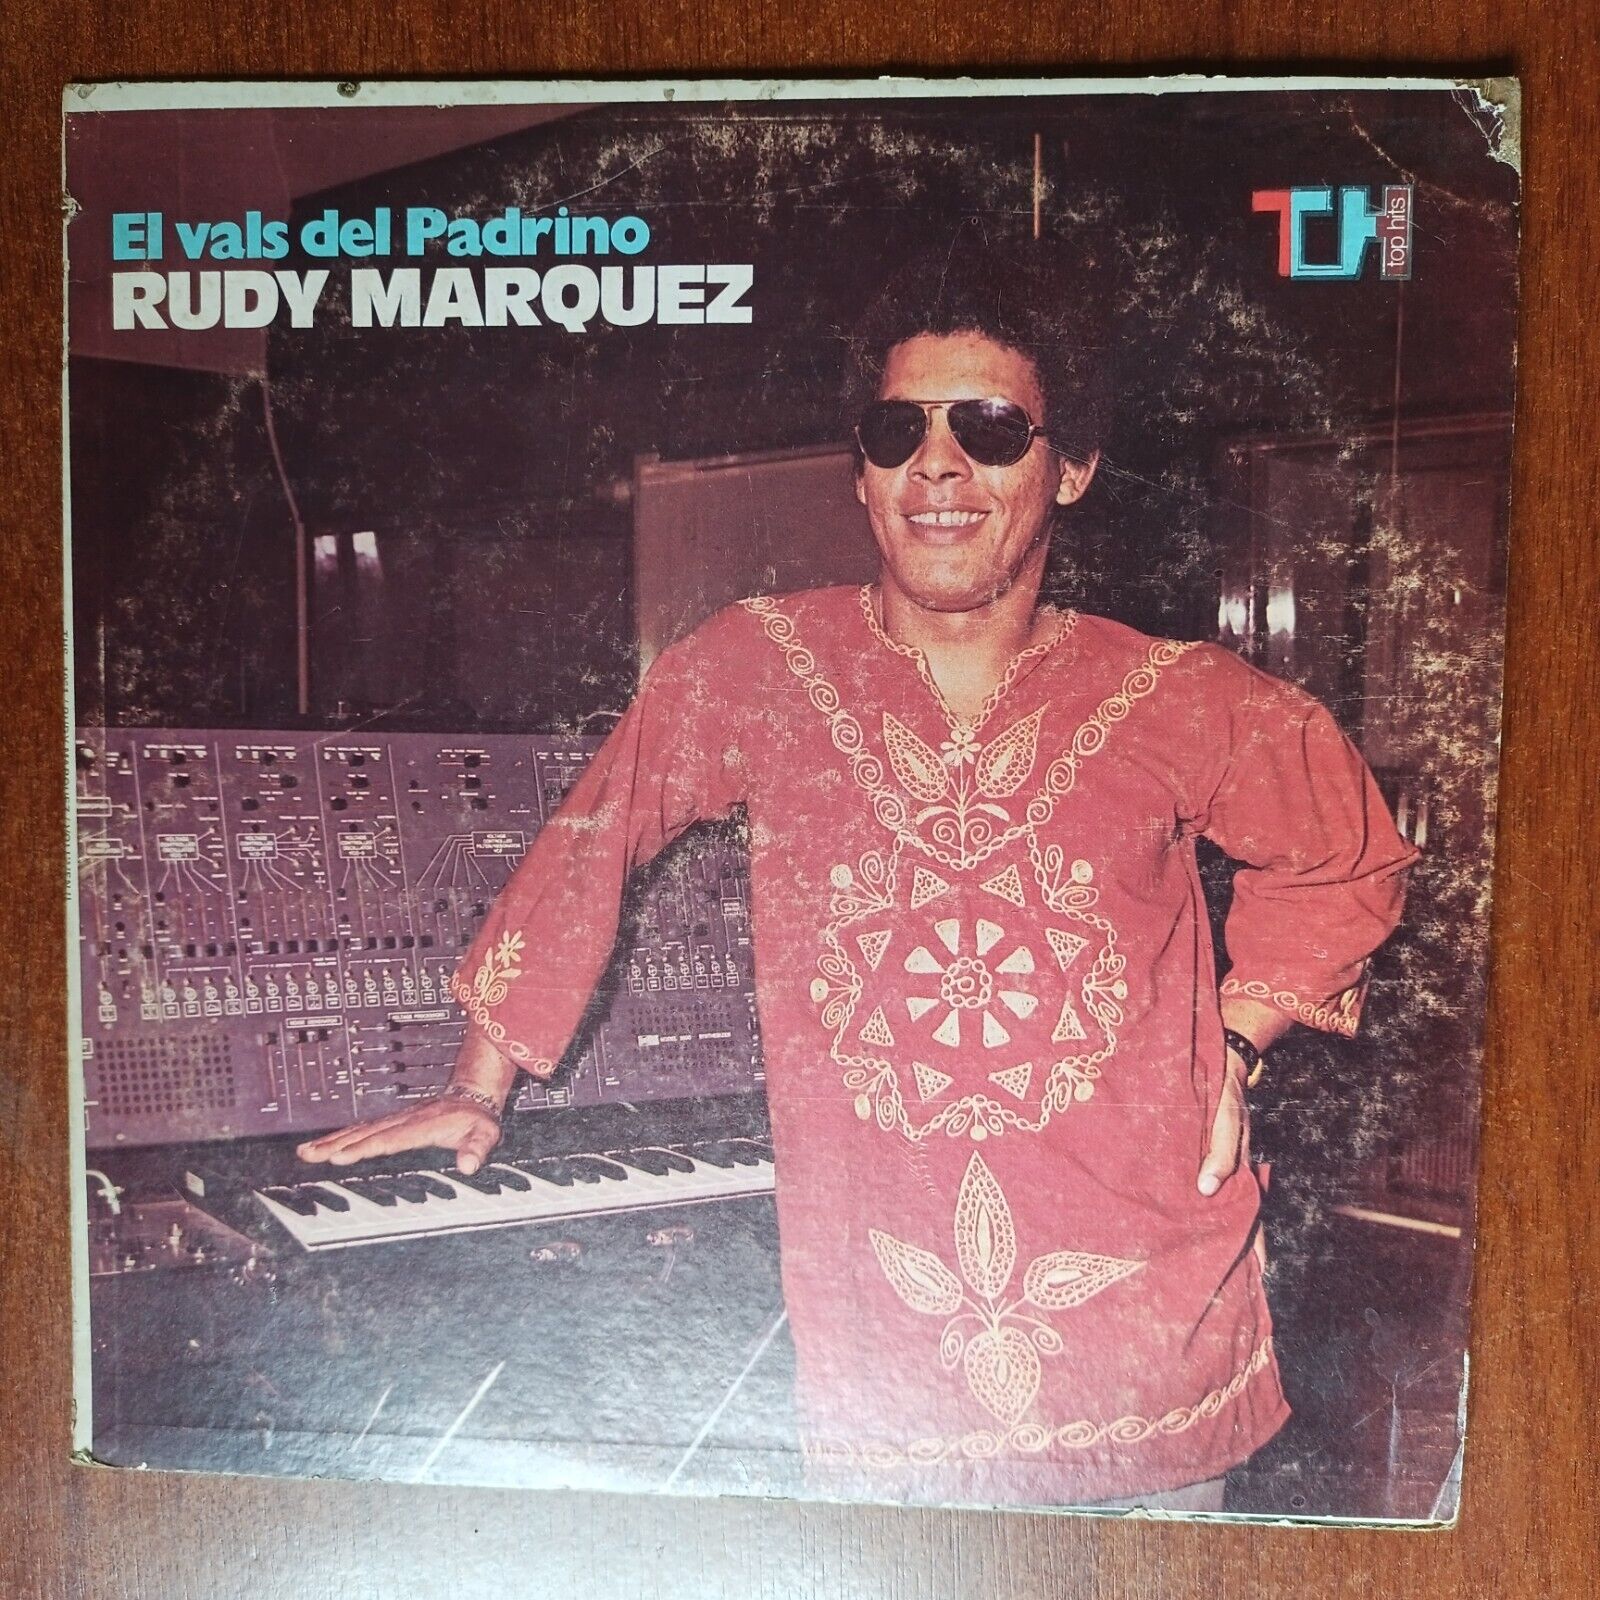 Rudy Marquez – Volumen II [1972] Vinyl LP Classic Rock Synth Pop Ballad